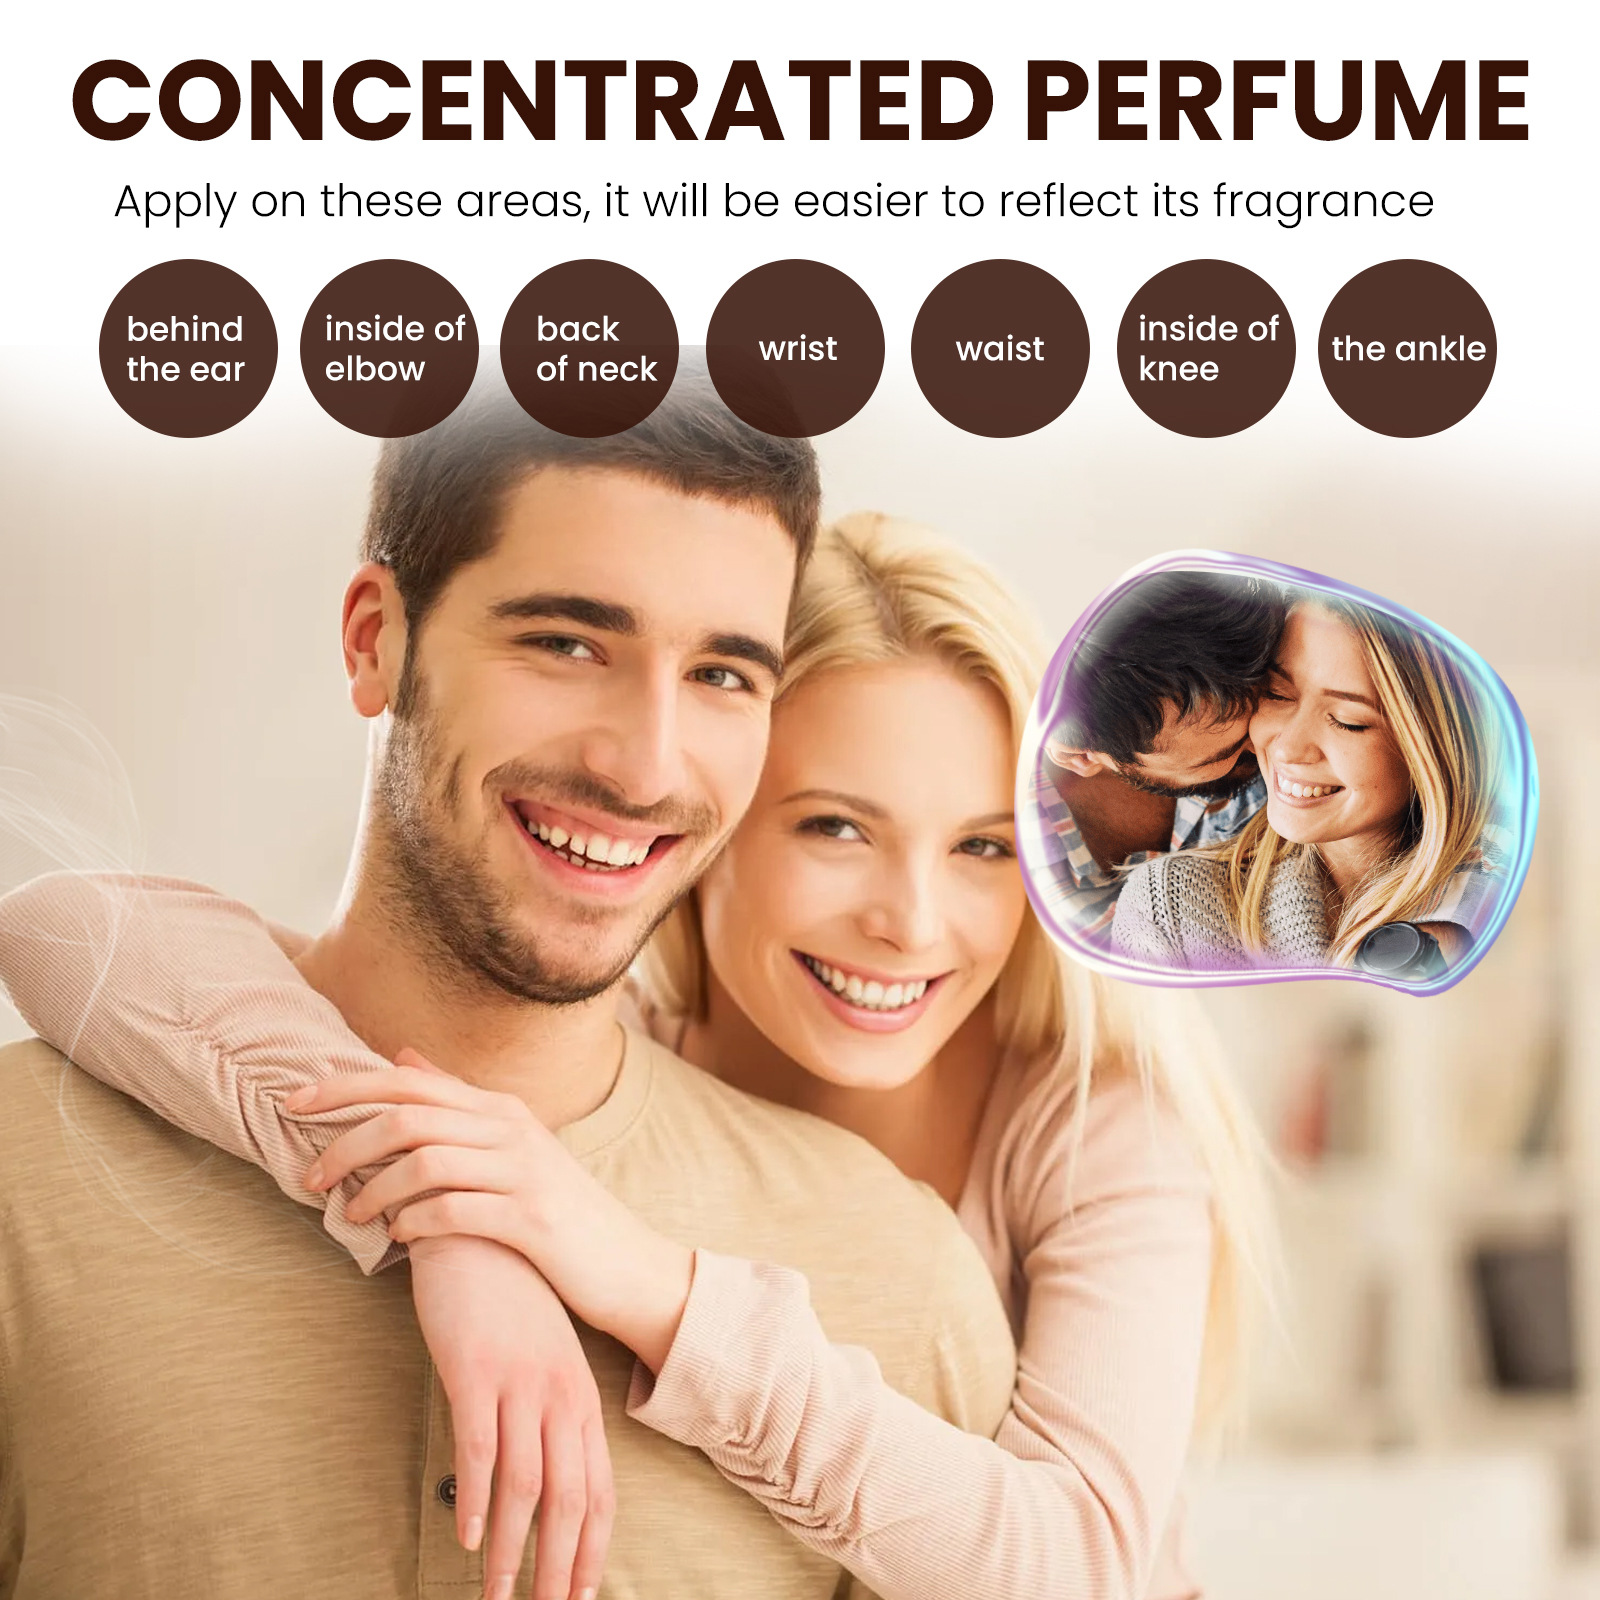 Eelhoe Essential Oil Perfume Long-Lasting Light Perfume Natural Minalist Portable Neck Wrist behind Ear Couple Dating Perfume